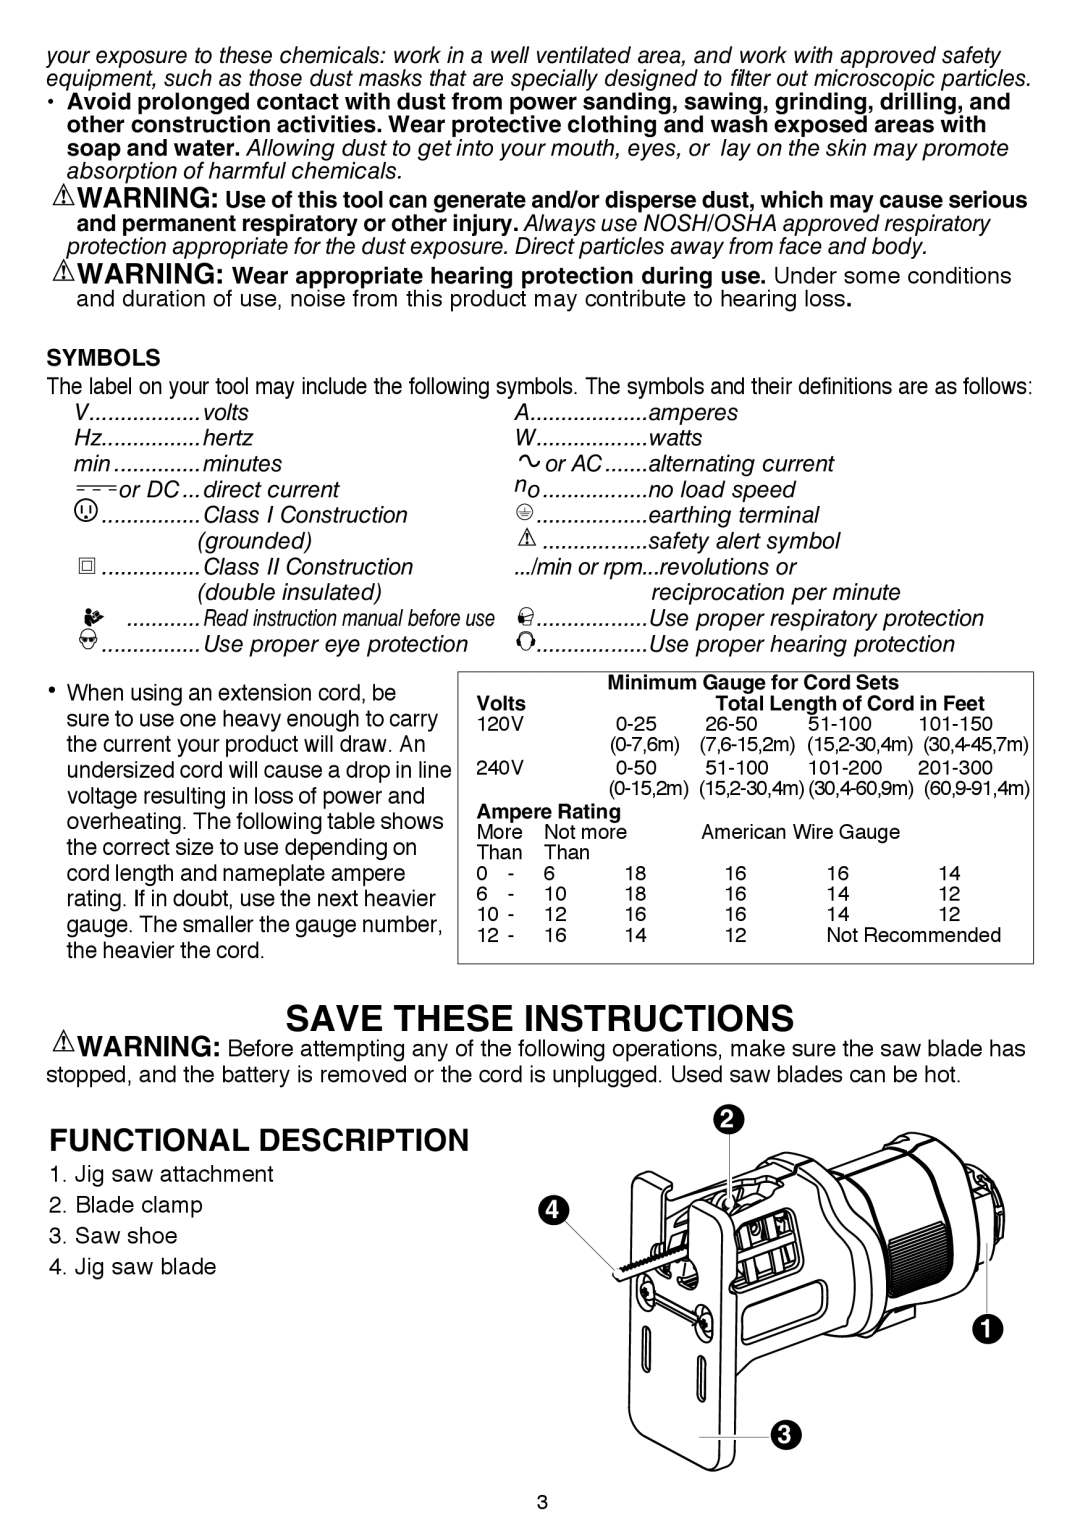 Black & Decker BDCMTJS instruction manual Save these instructions, Functional Description 